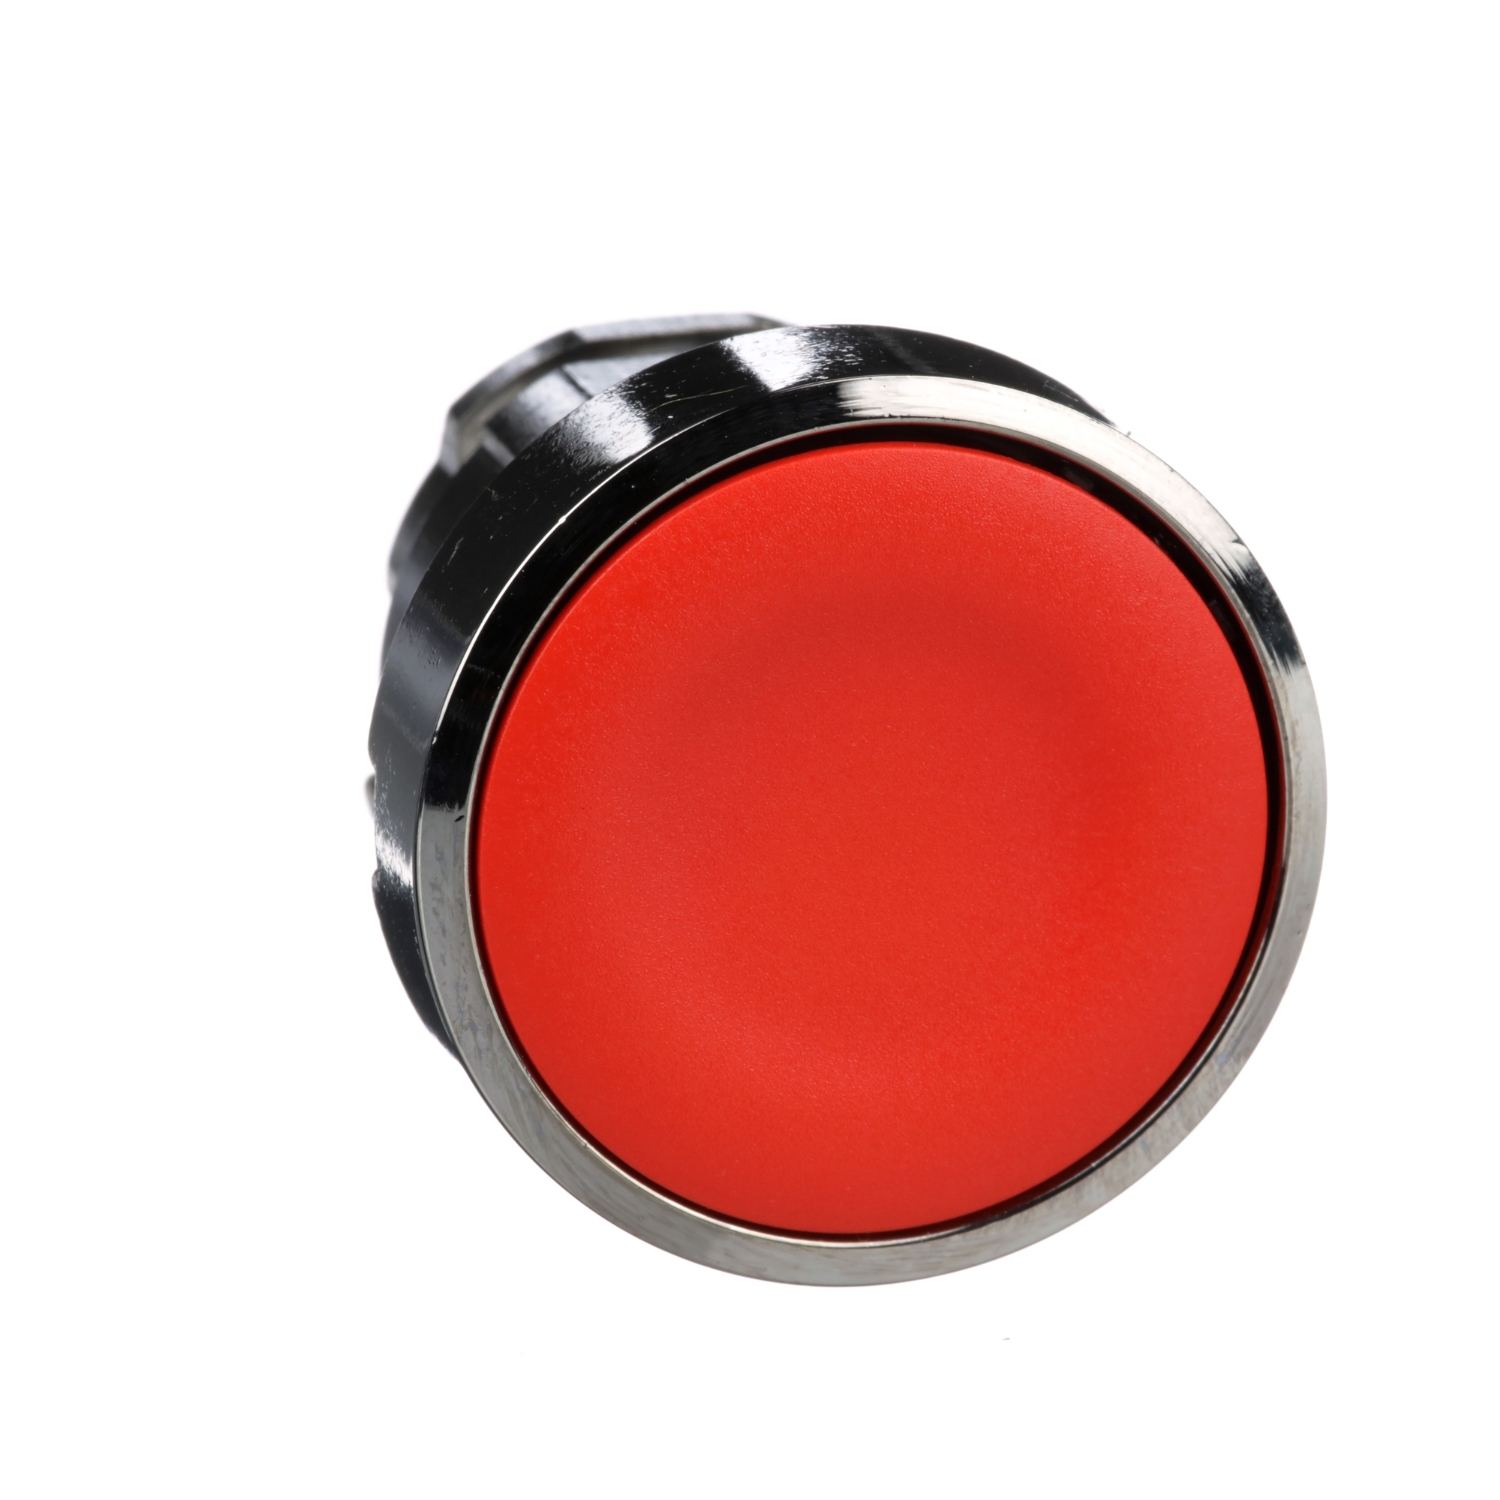 Harmony XB4 - tête bouton poussoir - Ø22 - affleurant - rouge